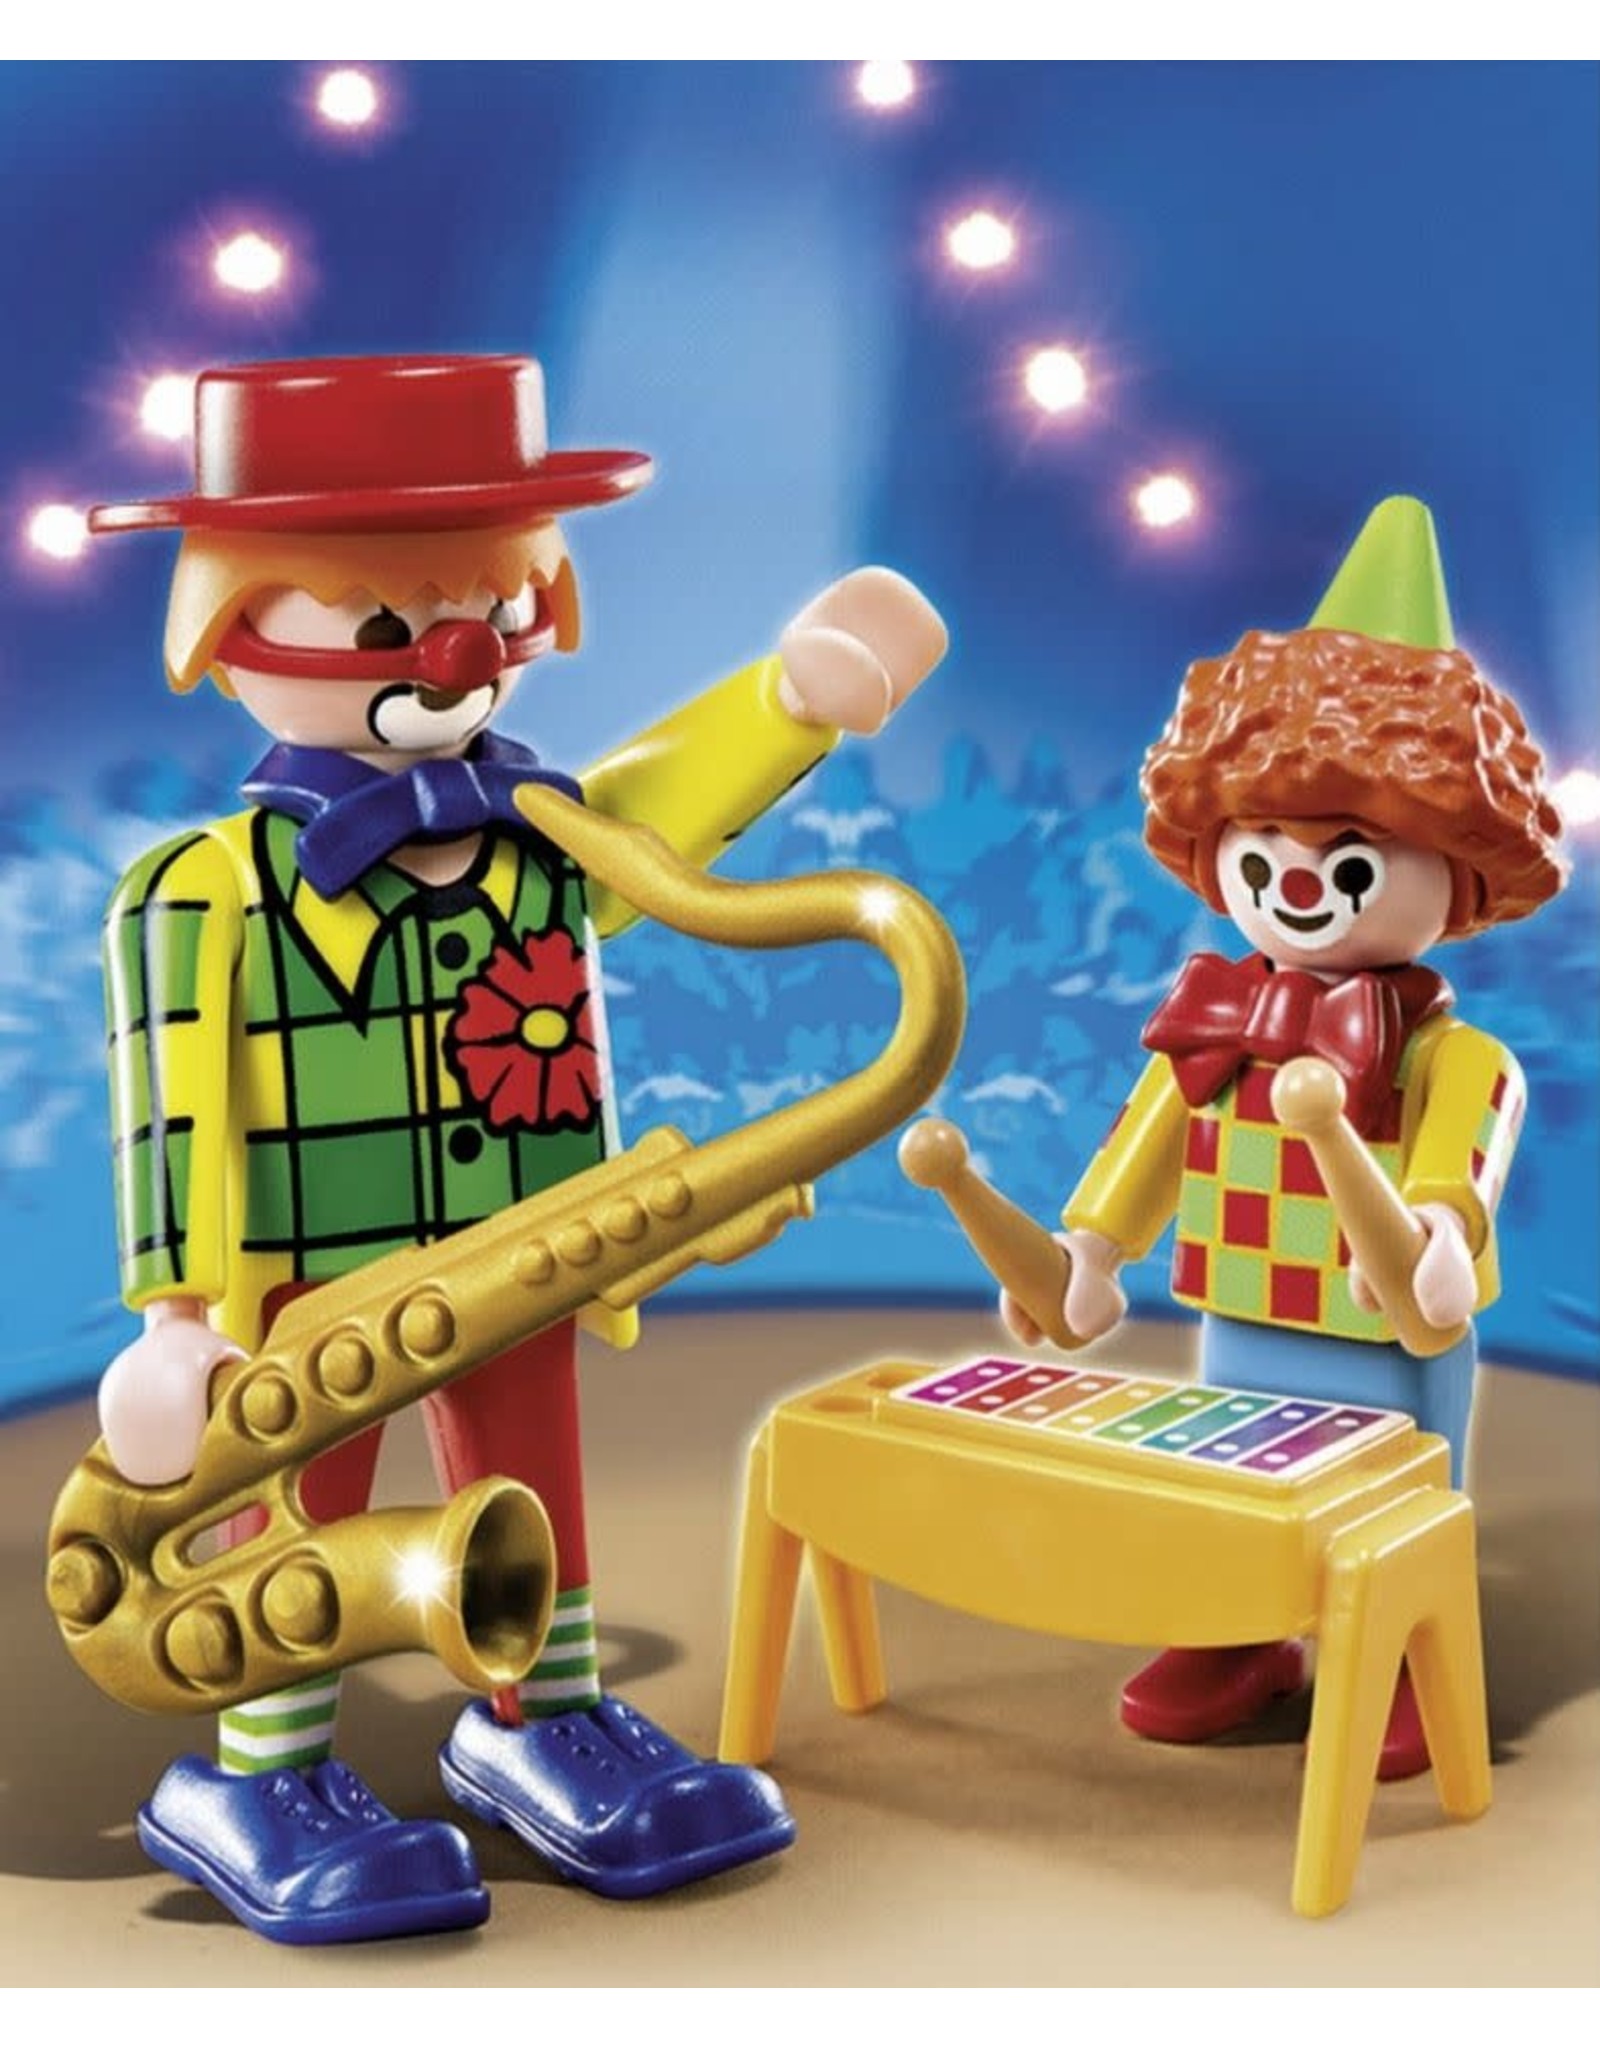 Playmobil Playmobil Special Plus 4787 Muzikale Clowns